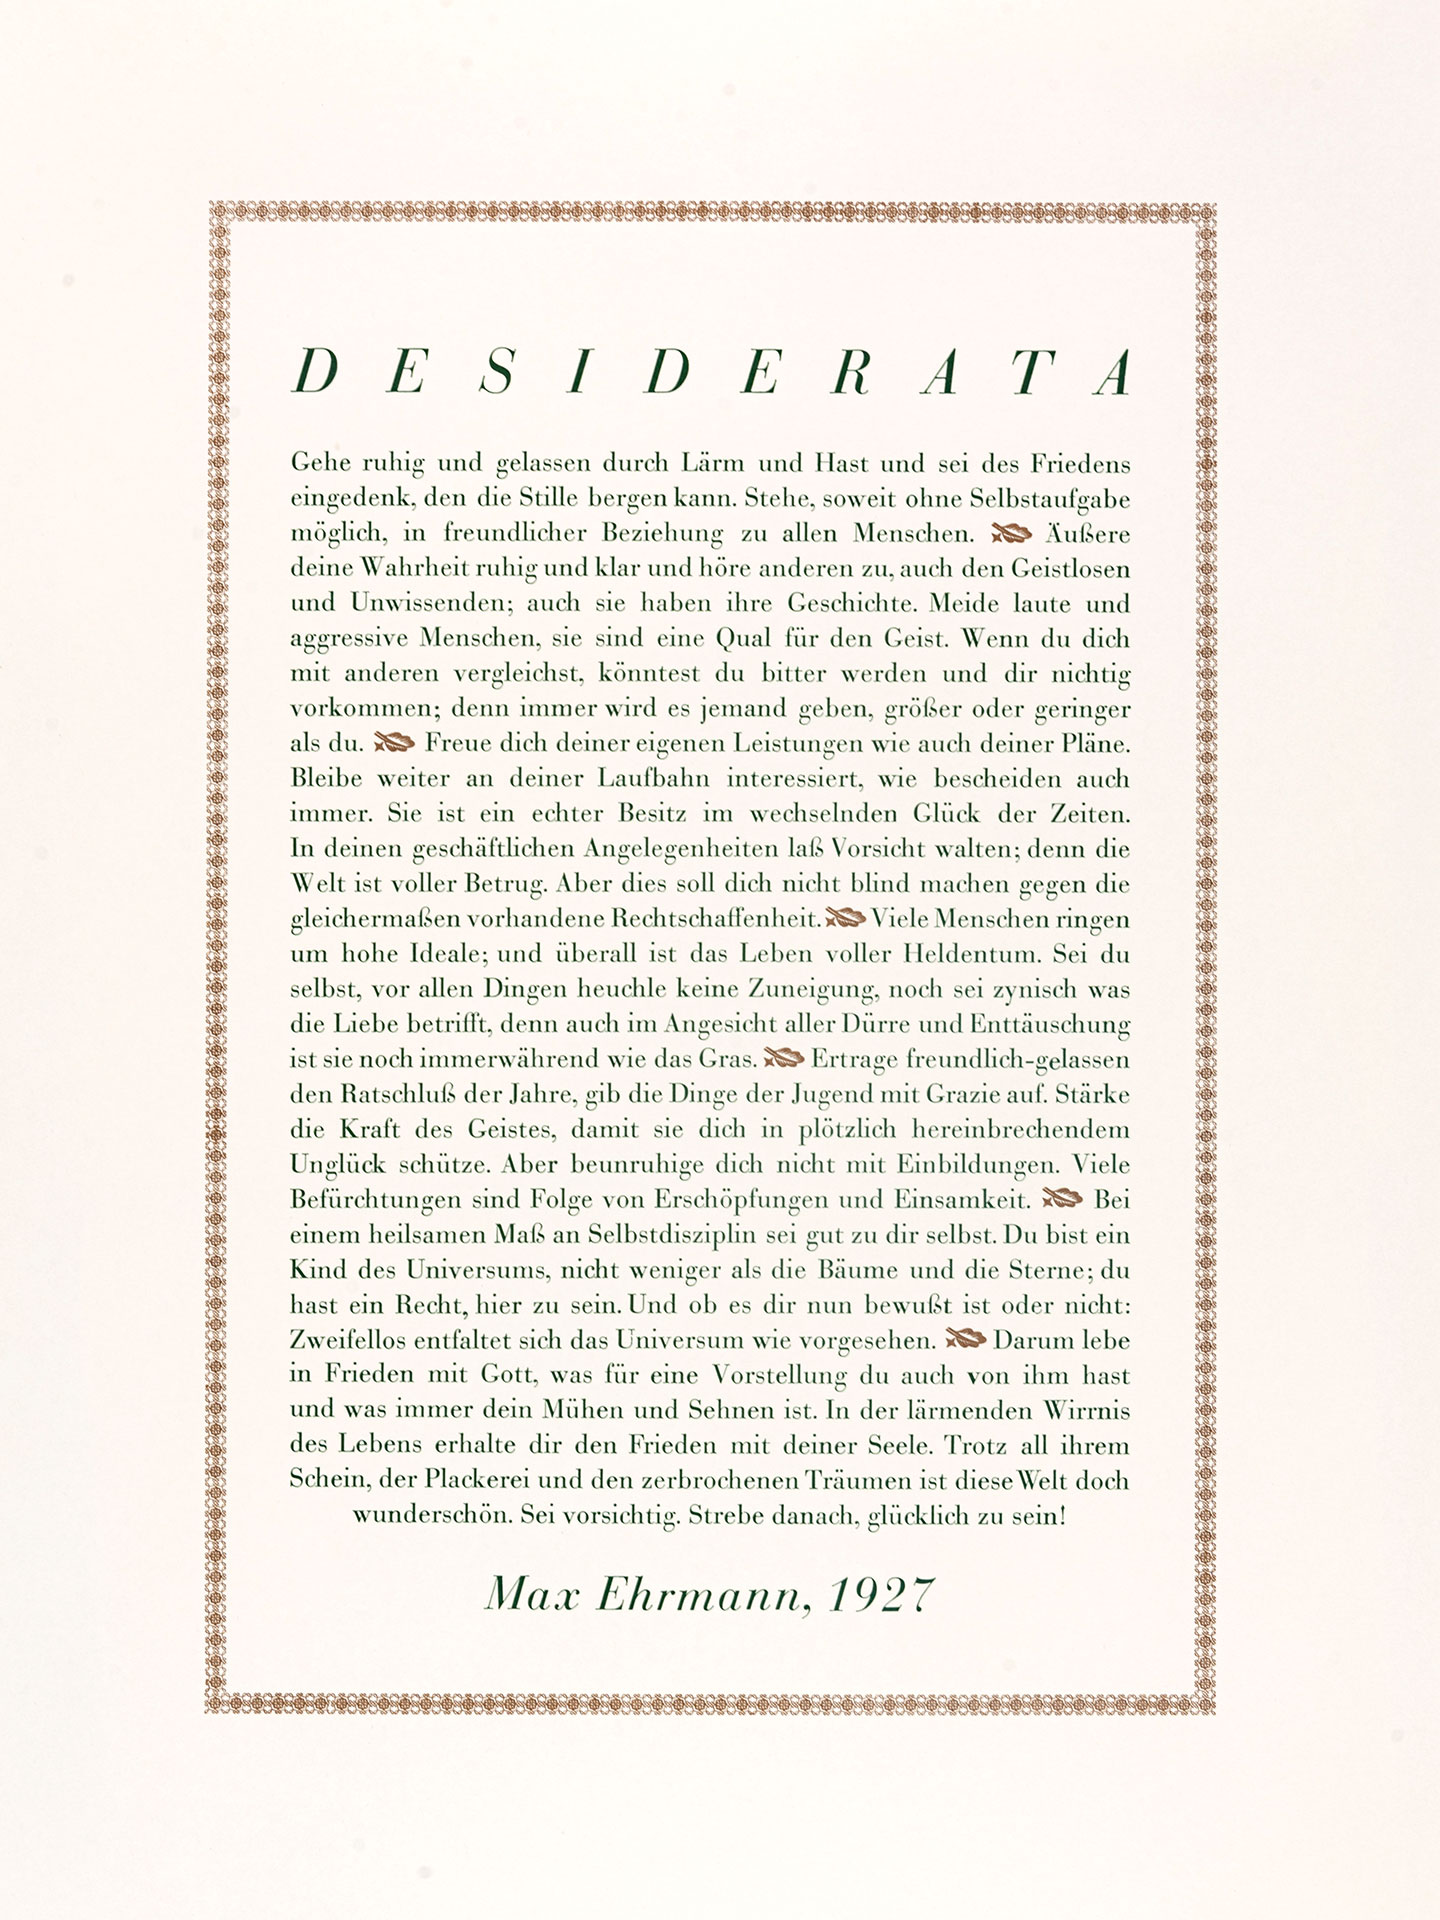 Press print Gutenberg Museum, Ehrmann: Desiderata